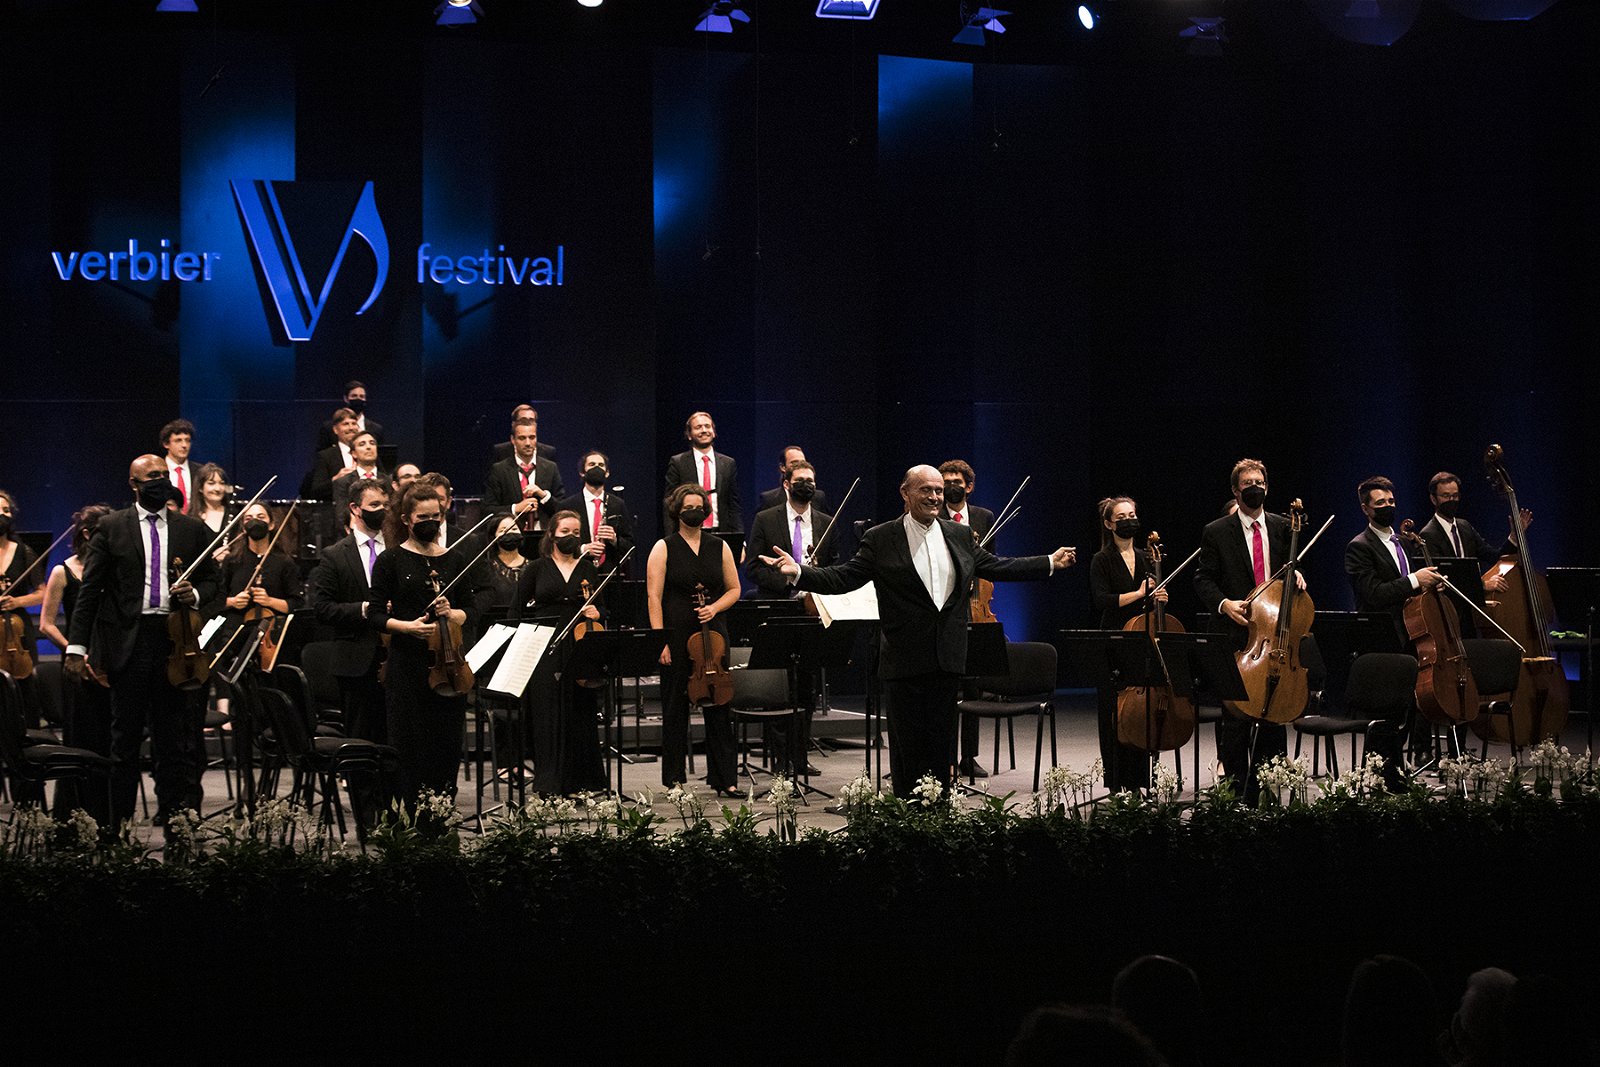 Verbier Festival Chamber Orchestra - International Classical Music  Management